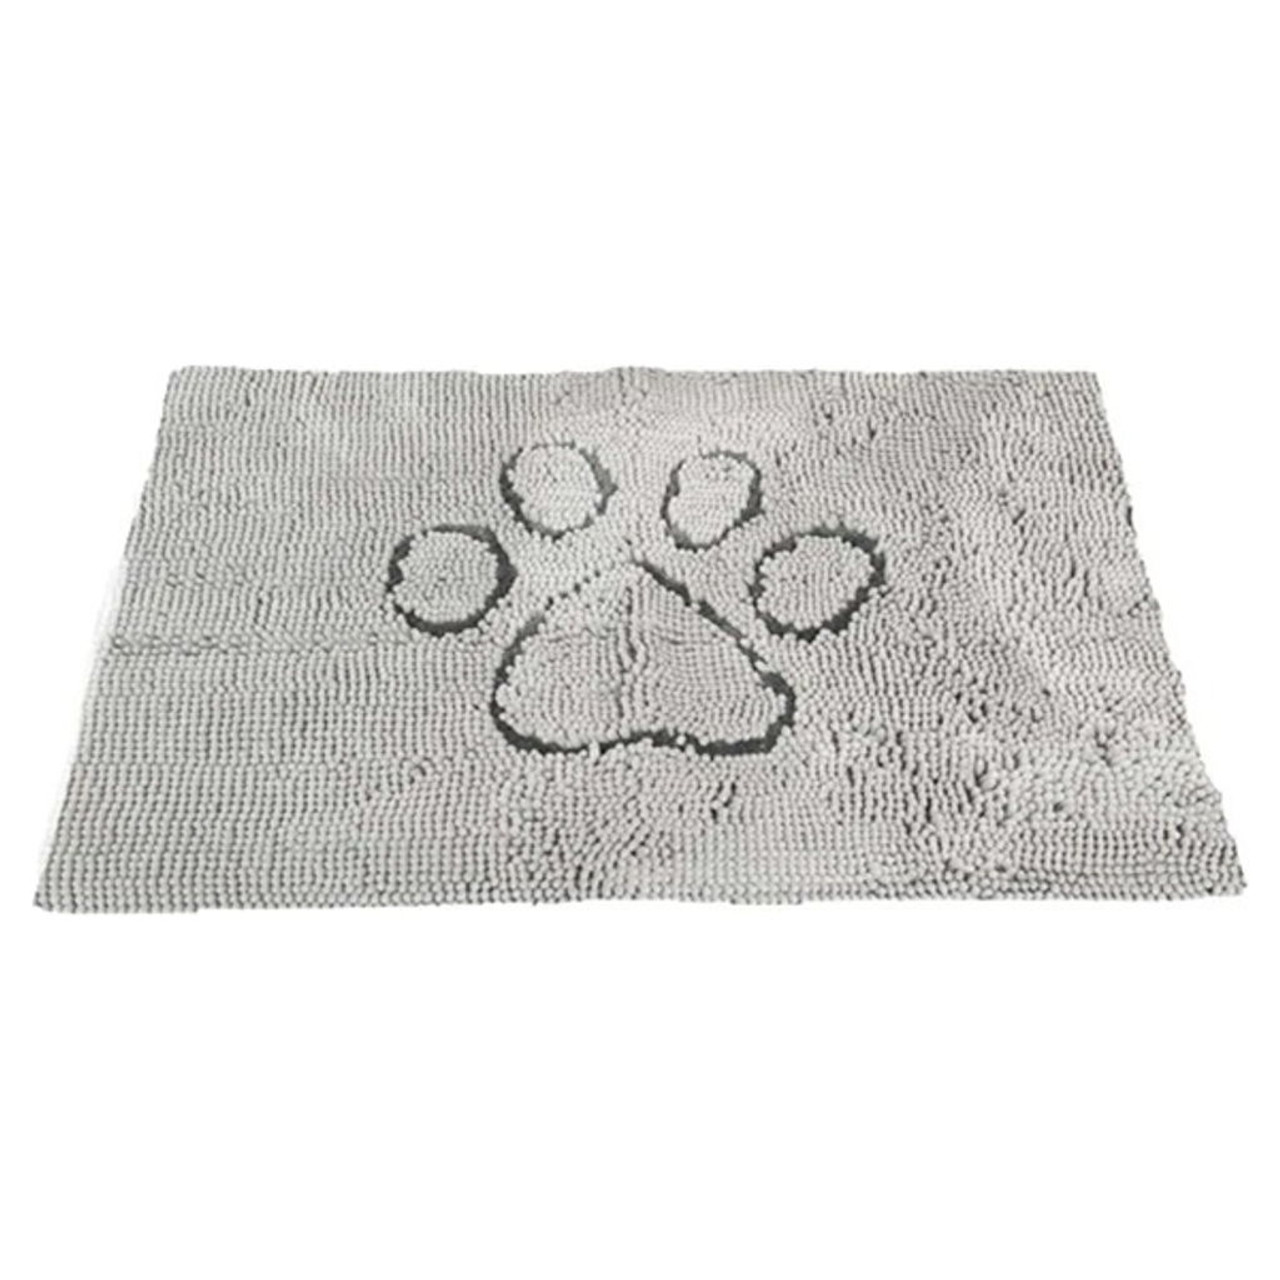 Dog Gone Smart - Dirty Dog Doormat Silver Grey - Large 35 x 26